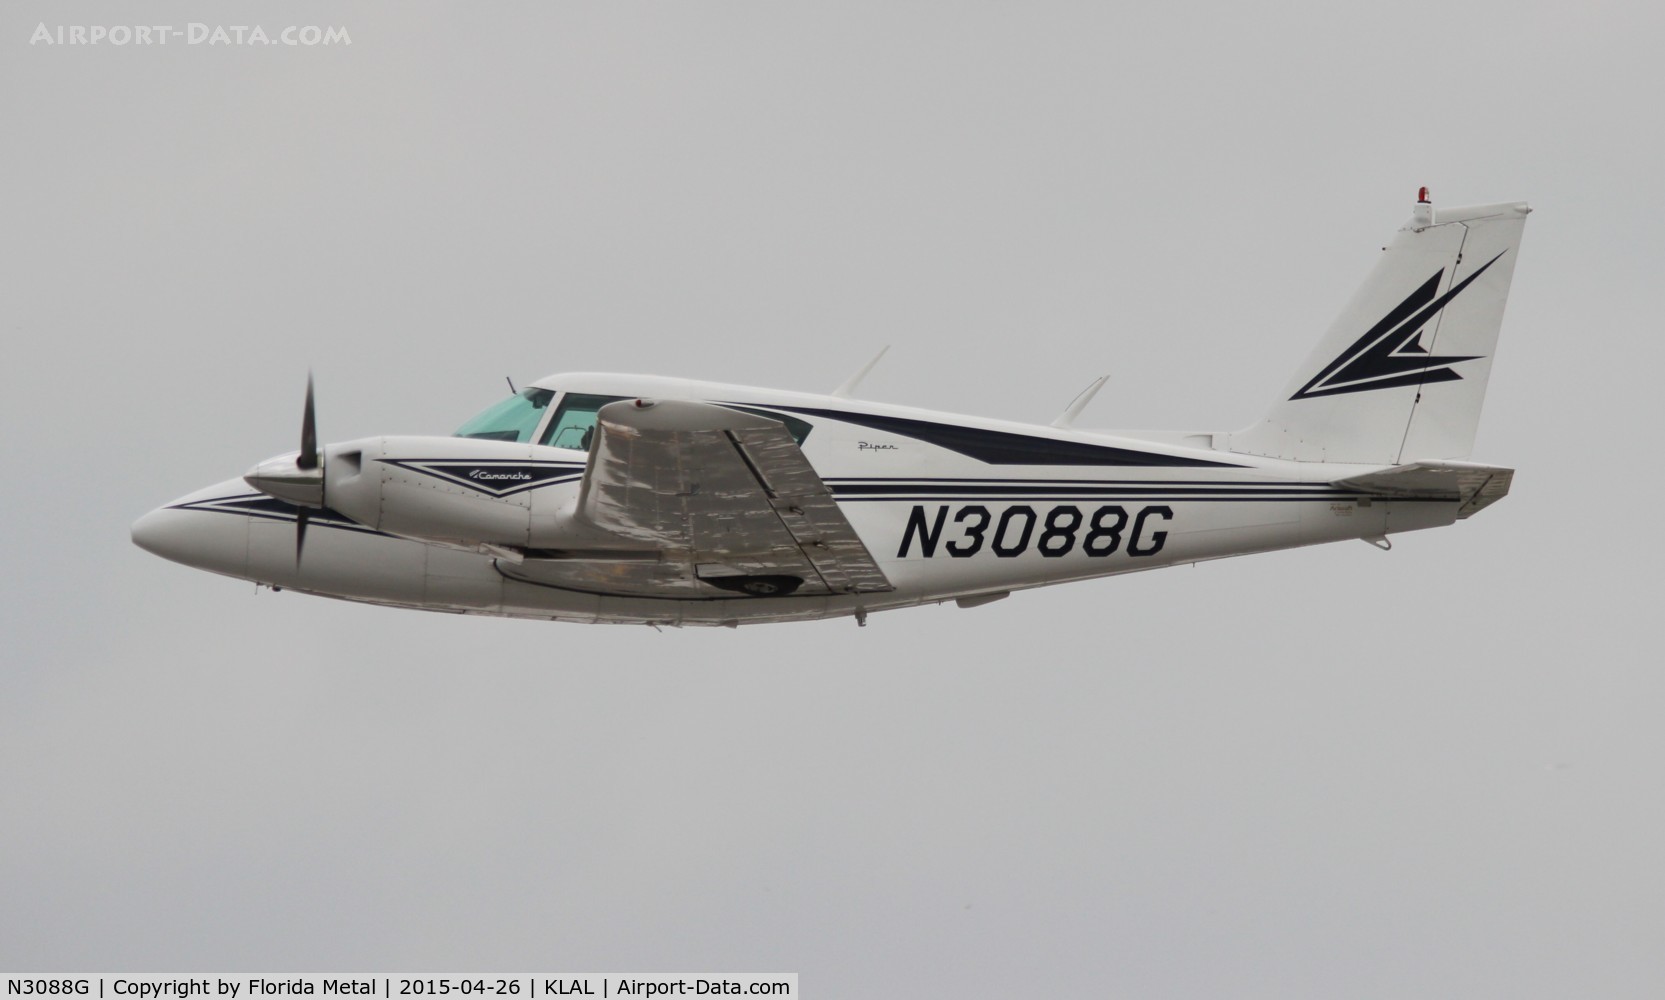 N3088G, 1963 Piper PA-30 Twin Comanche C/N 30-88, SNF LAL 2015